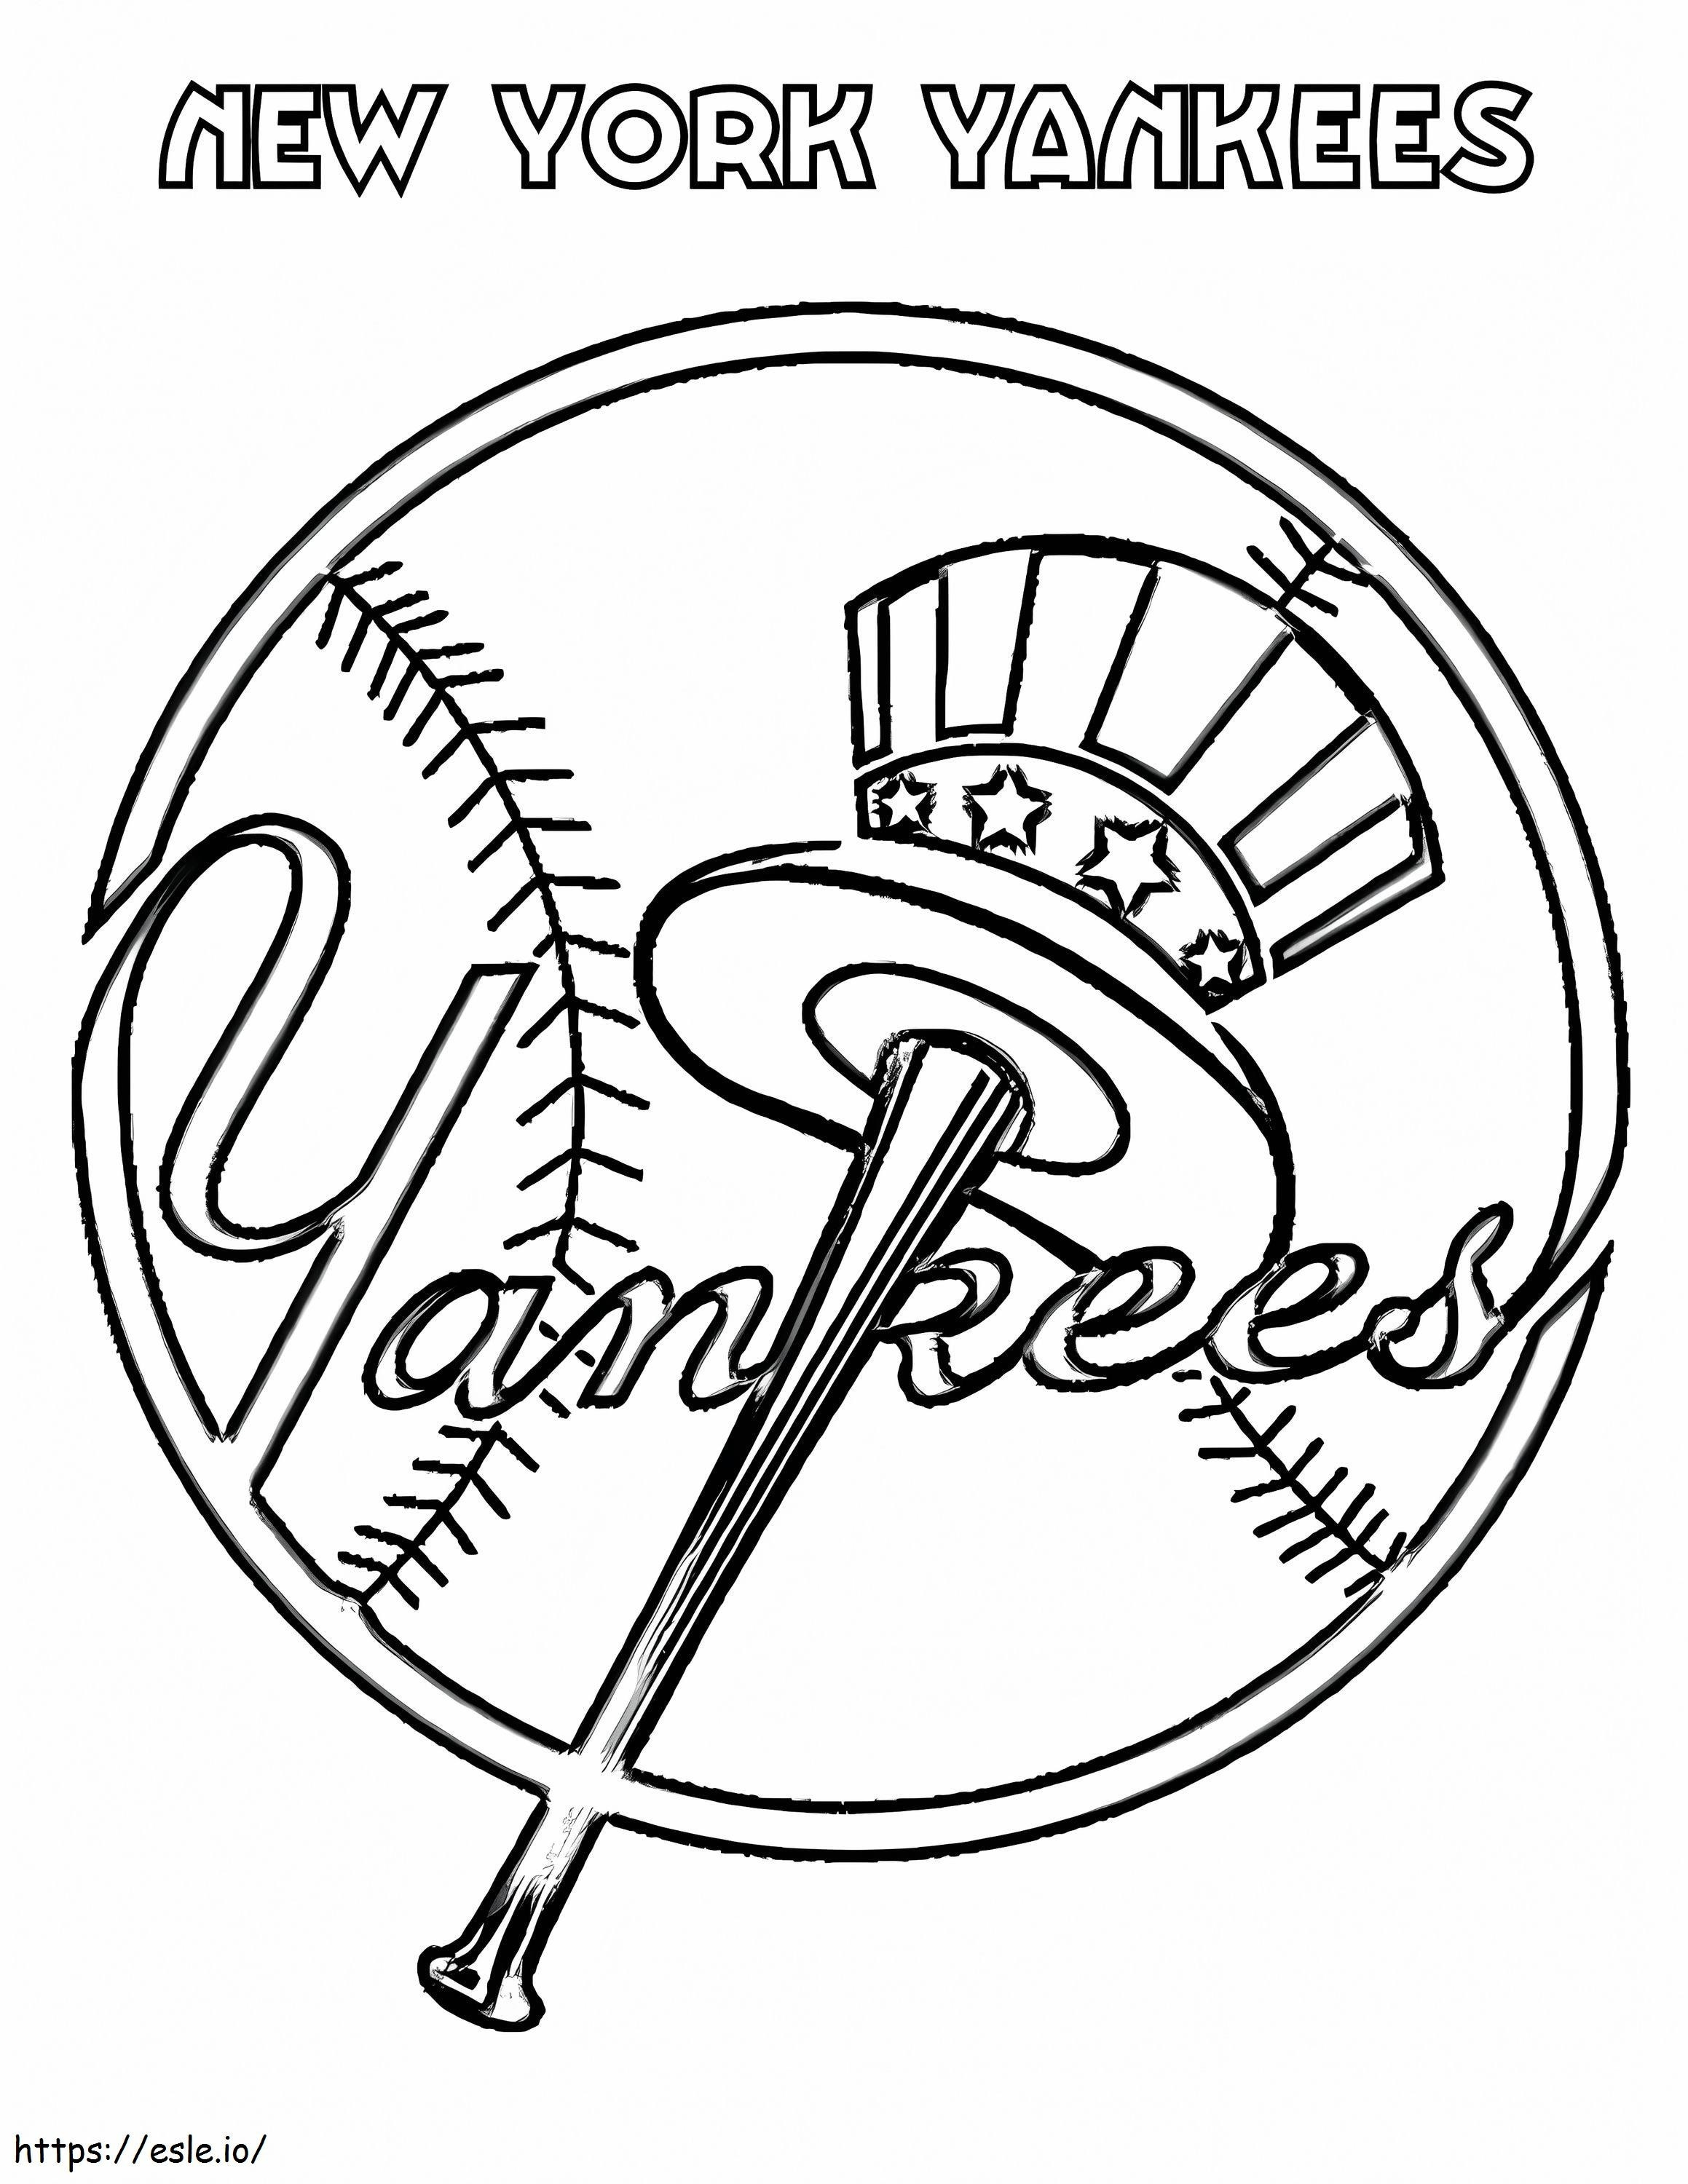 New York Yankees ausmalbilder